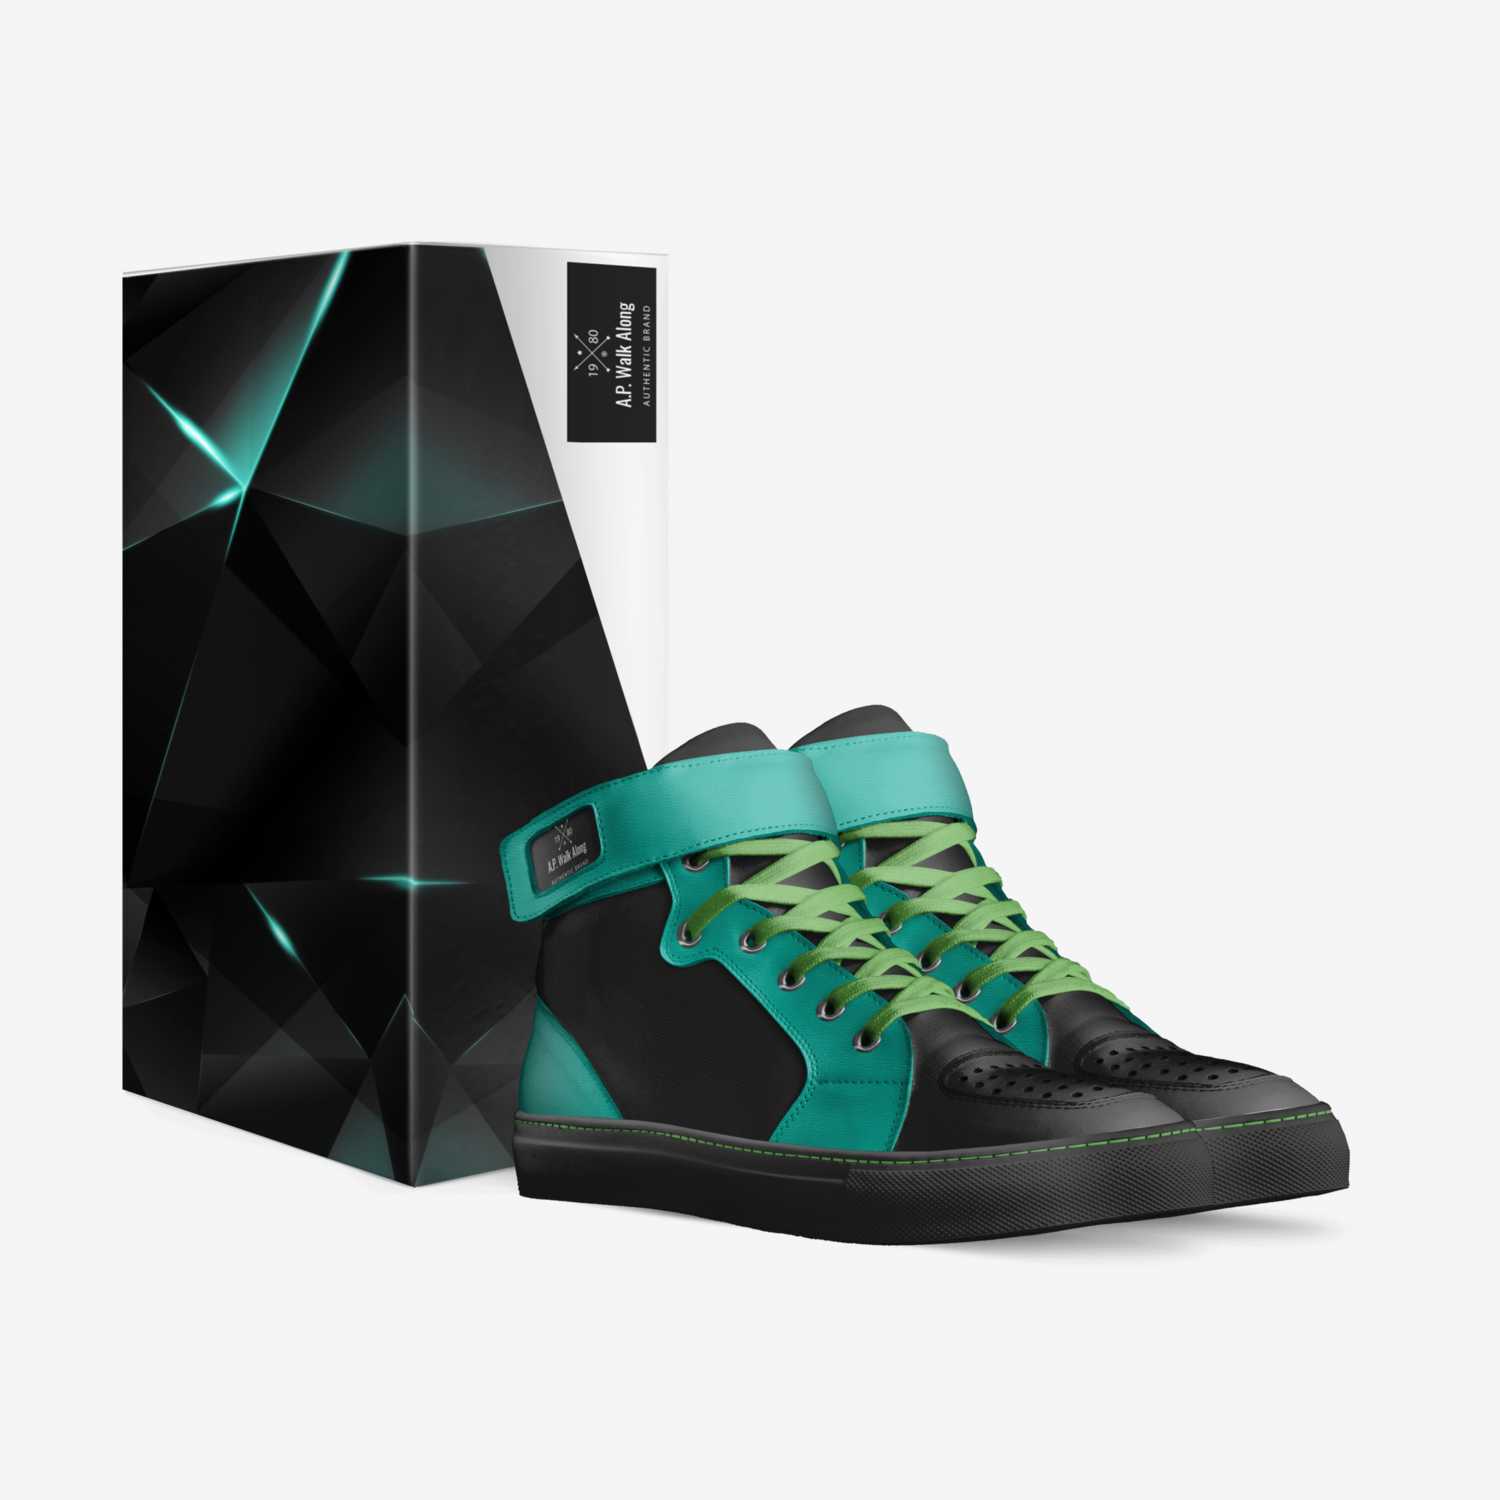 A.P. Walk Along custom made in Italy shoes by Kari Gernant | Box view